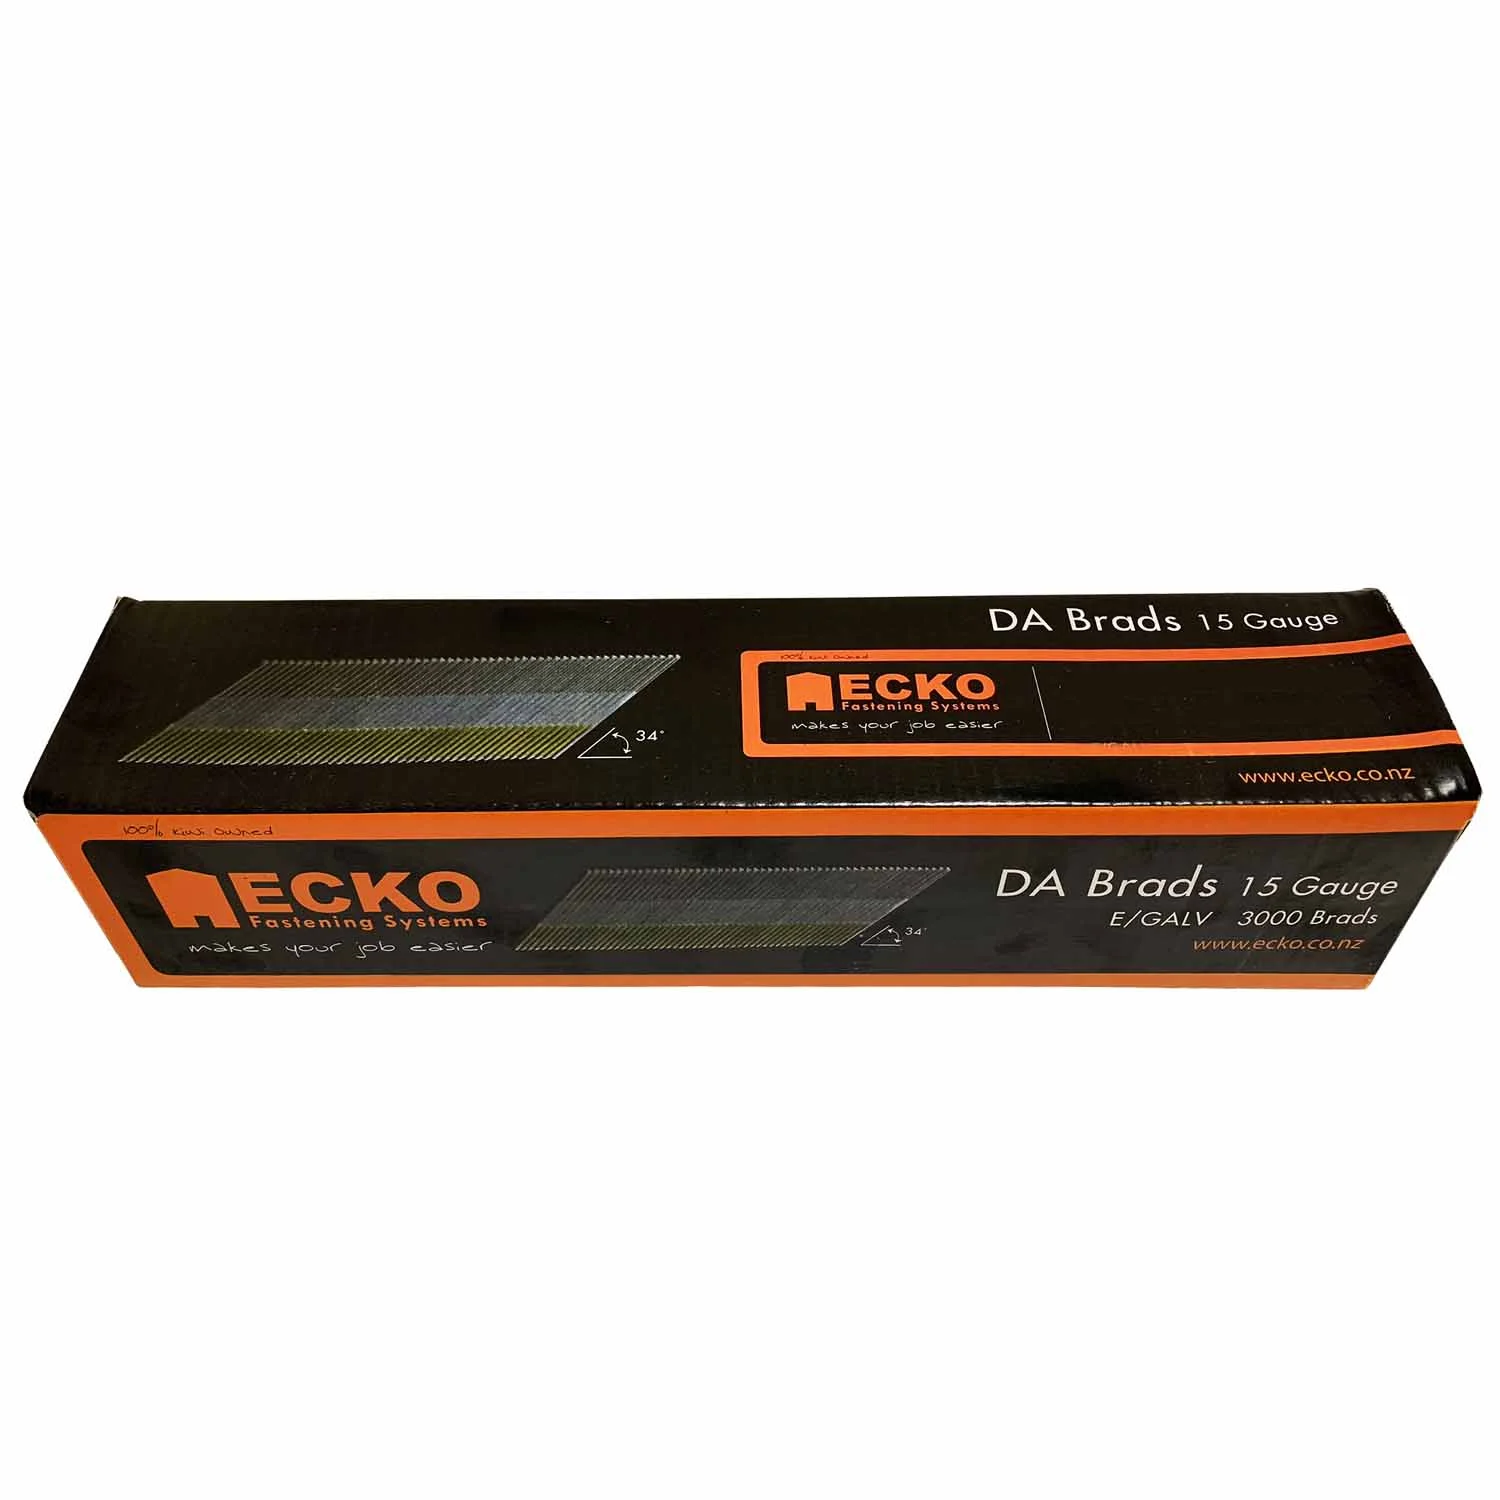 Ecko Da/Bdg Series 15 Gauge Angle Brads Gasless Pack Da19 X 45Mm Electro Galvanised (3000/Box)